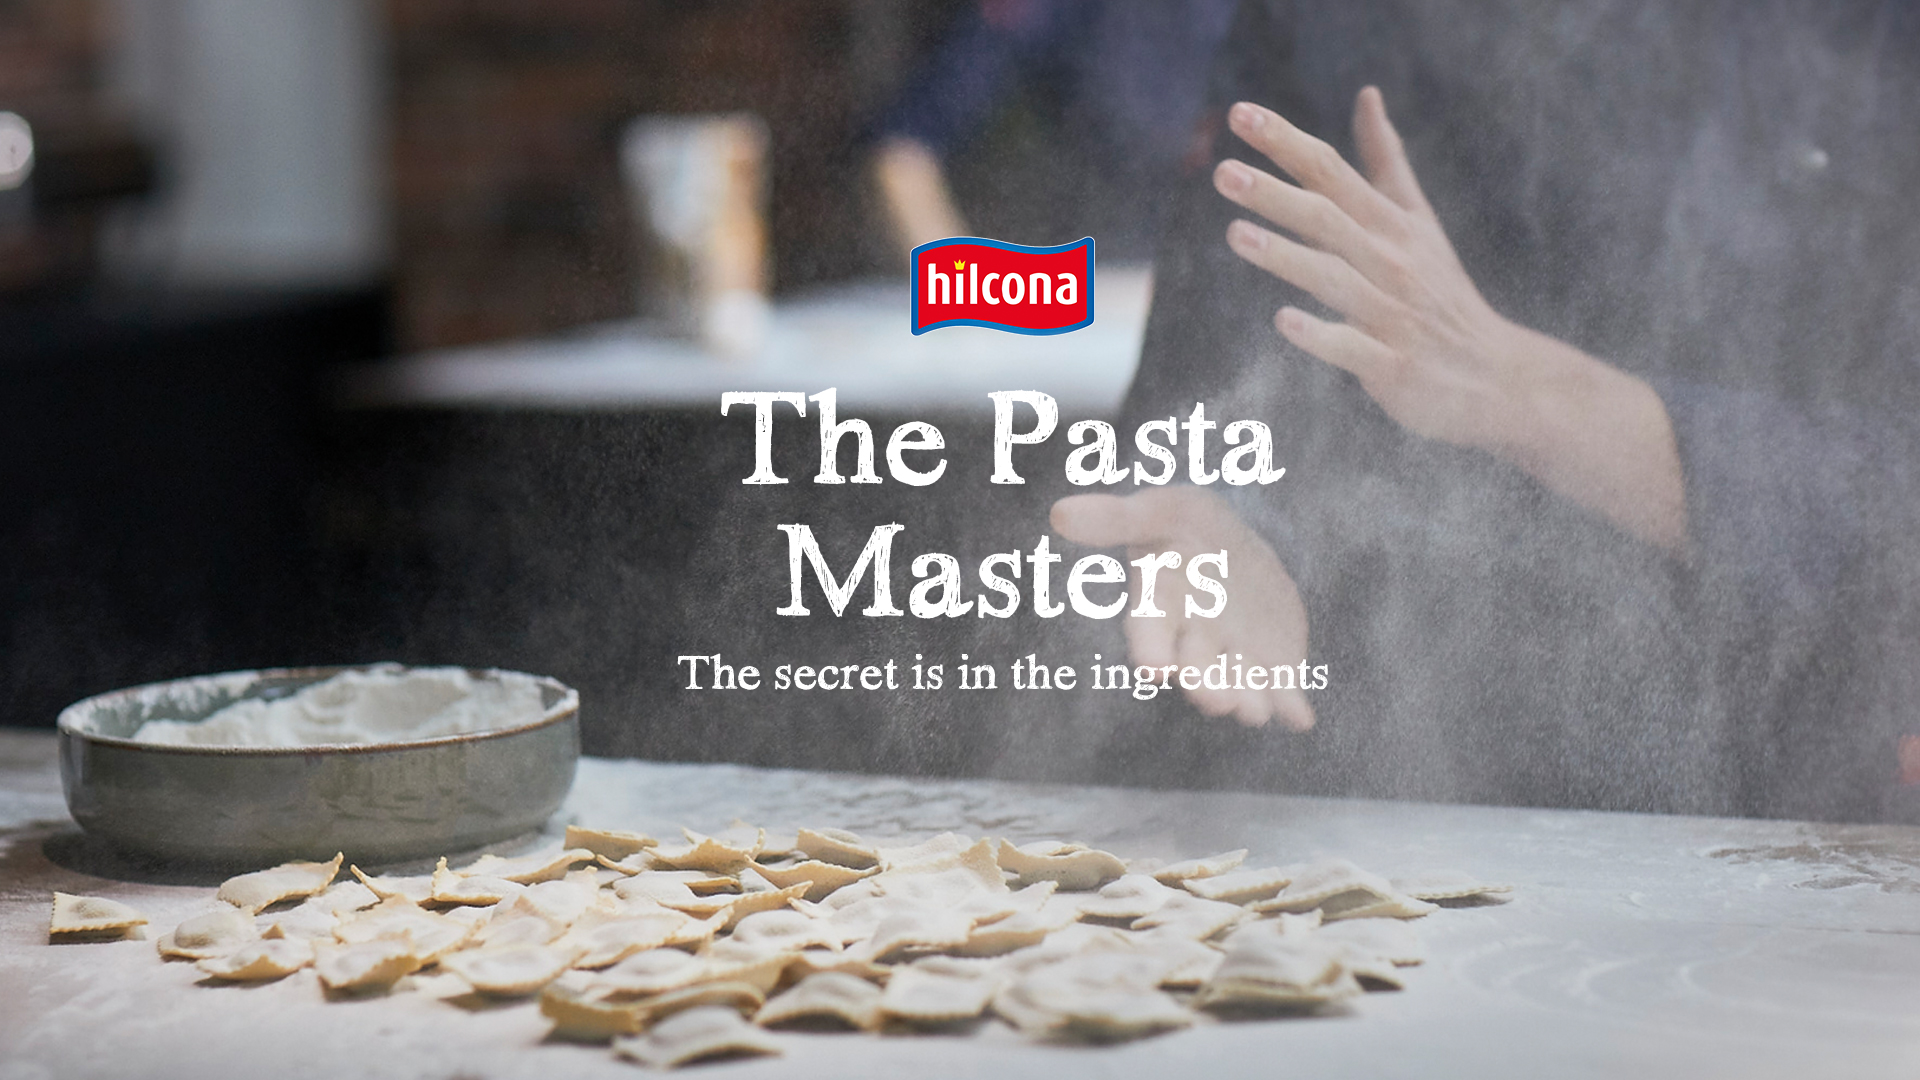 Hilcona - The pasta masters